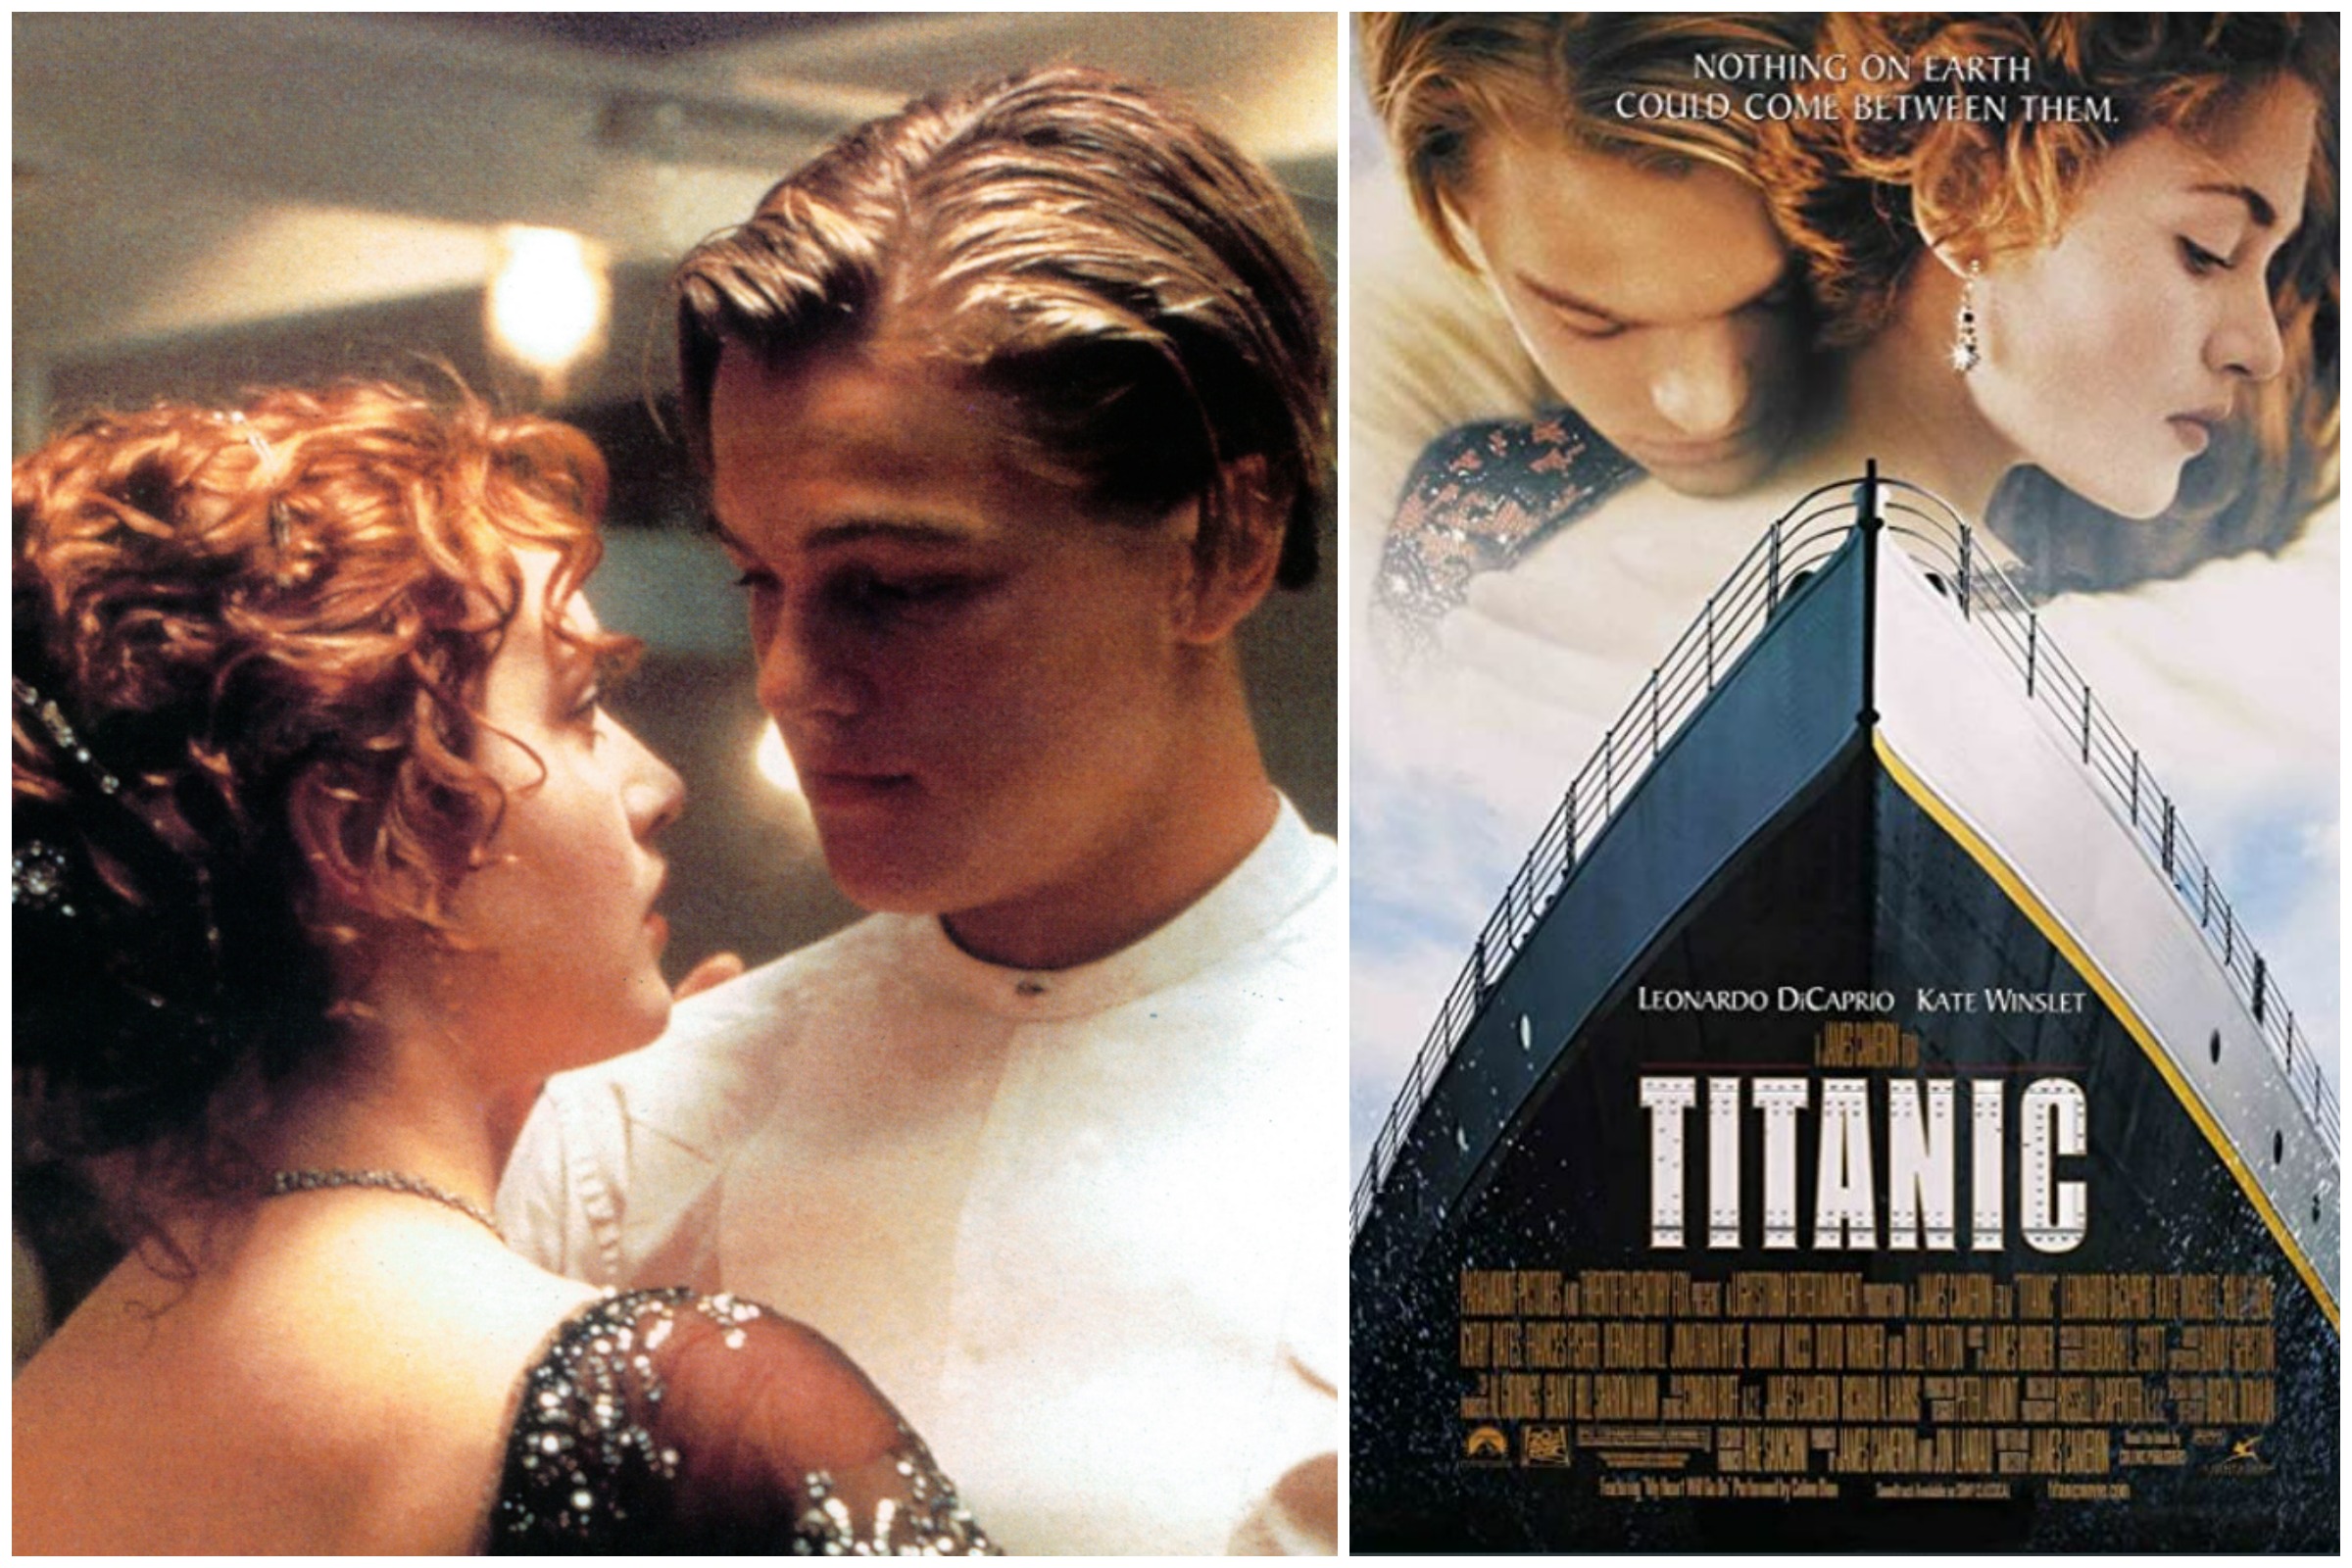 Kate Winslet addresses whether Jack could've fit on Titanic door